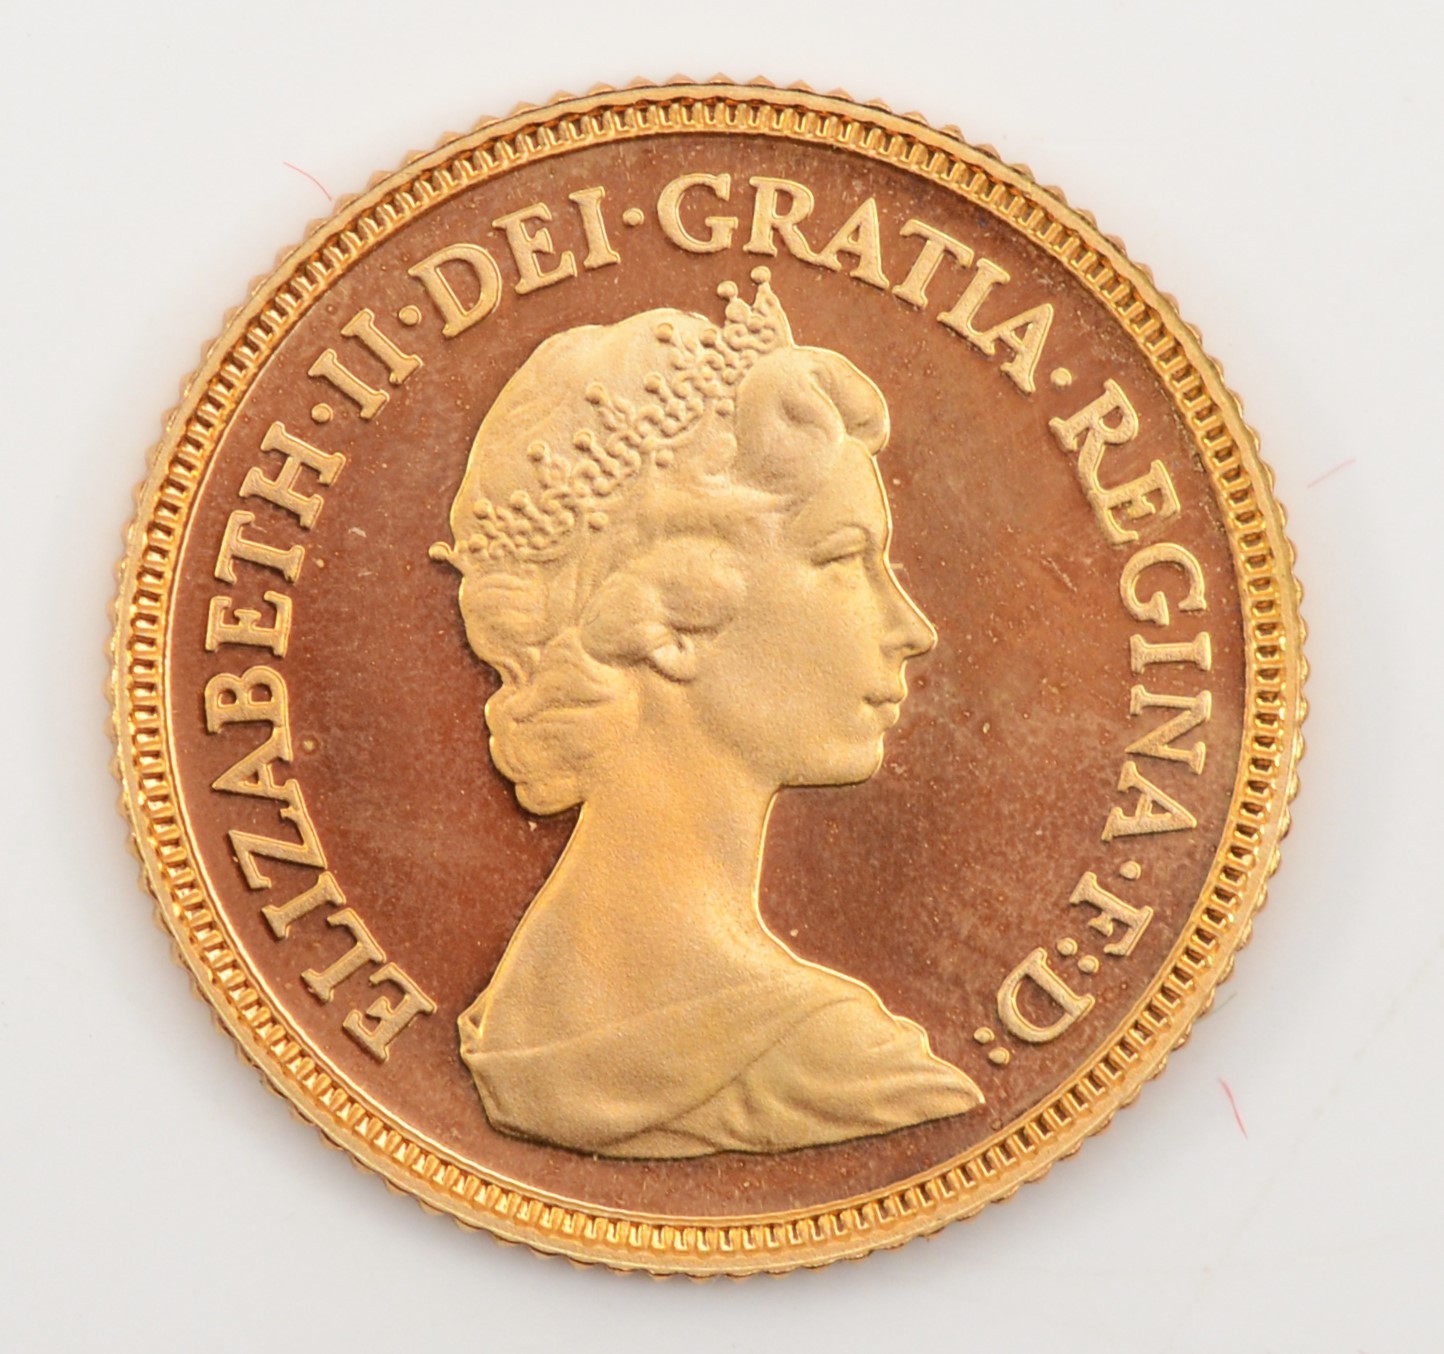 Royal Mint, proof half sovereign, 1980, case